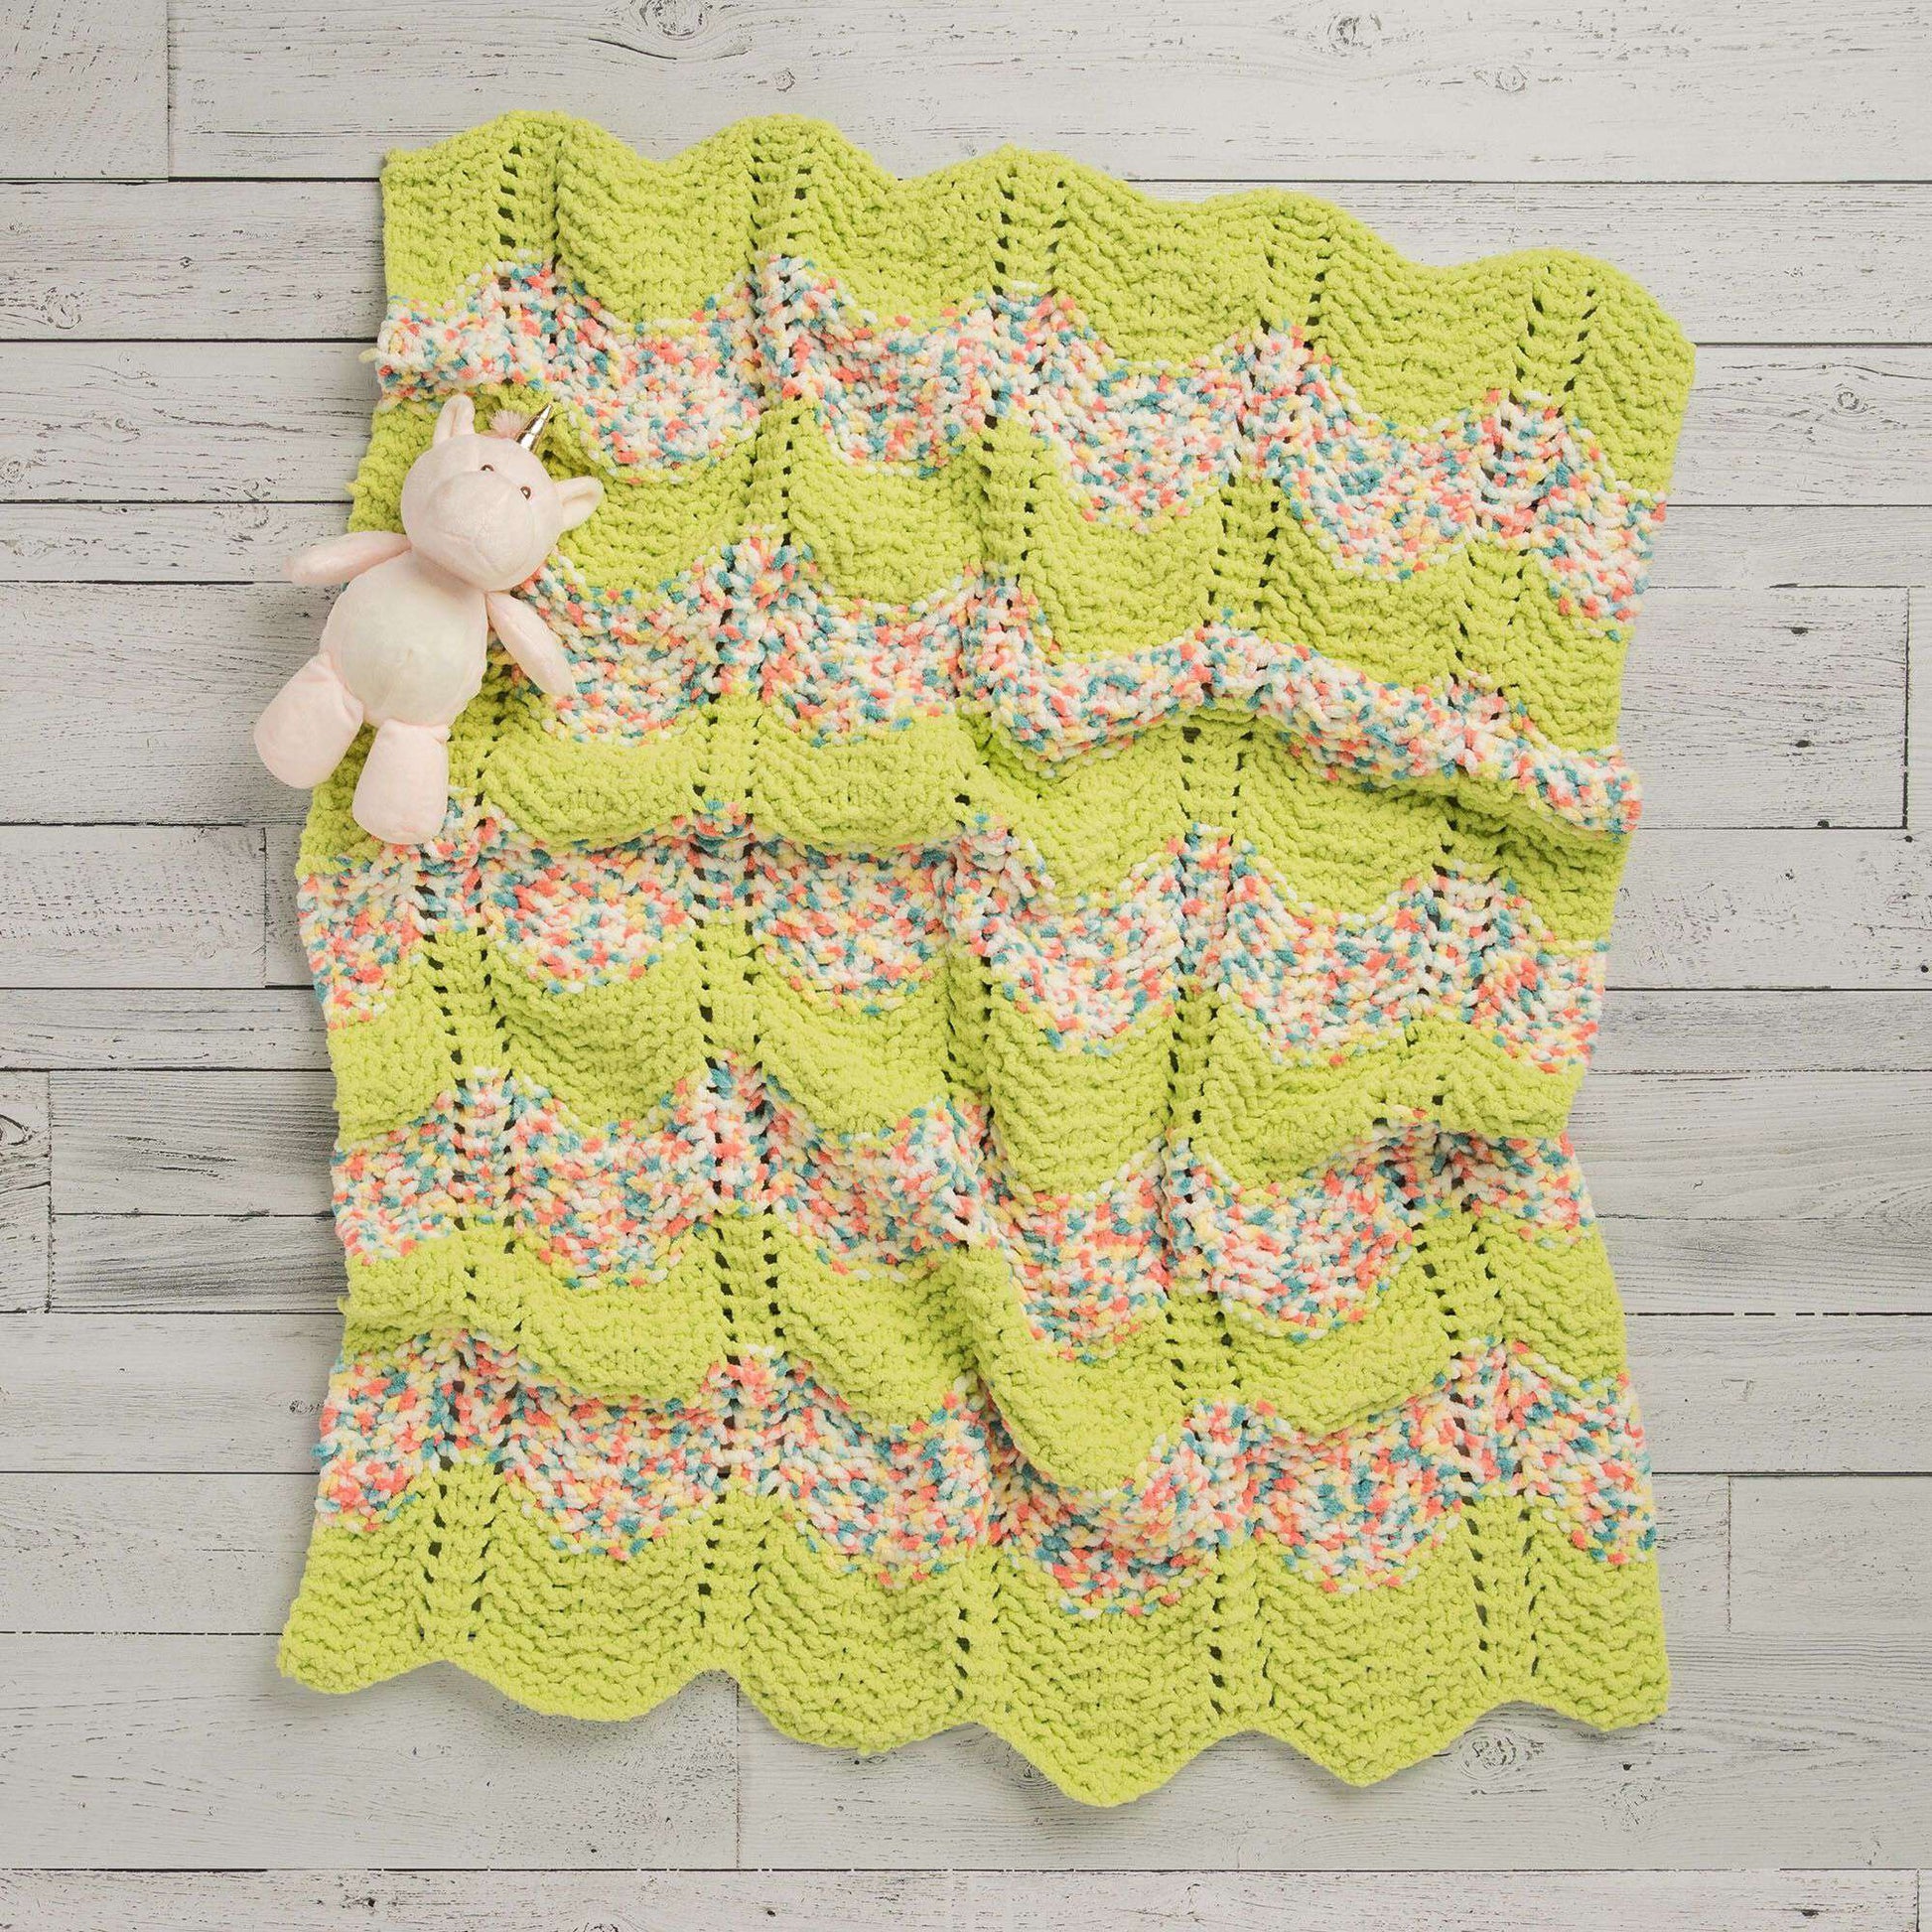 Bernat Baby Blanket Knitting Yarn in Terracotta | Size: 300g/10.5oz | Pattern: Knit | by Yarnspirations